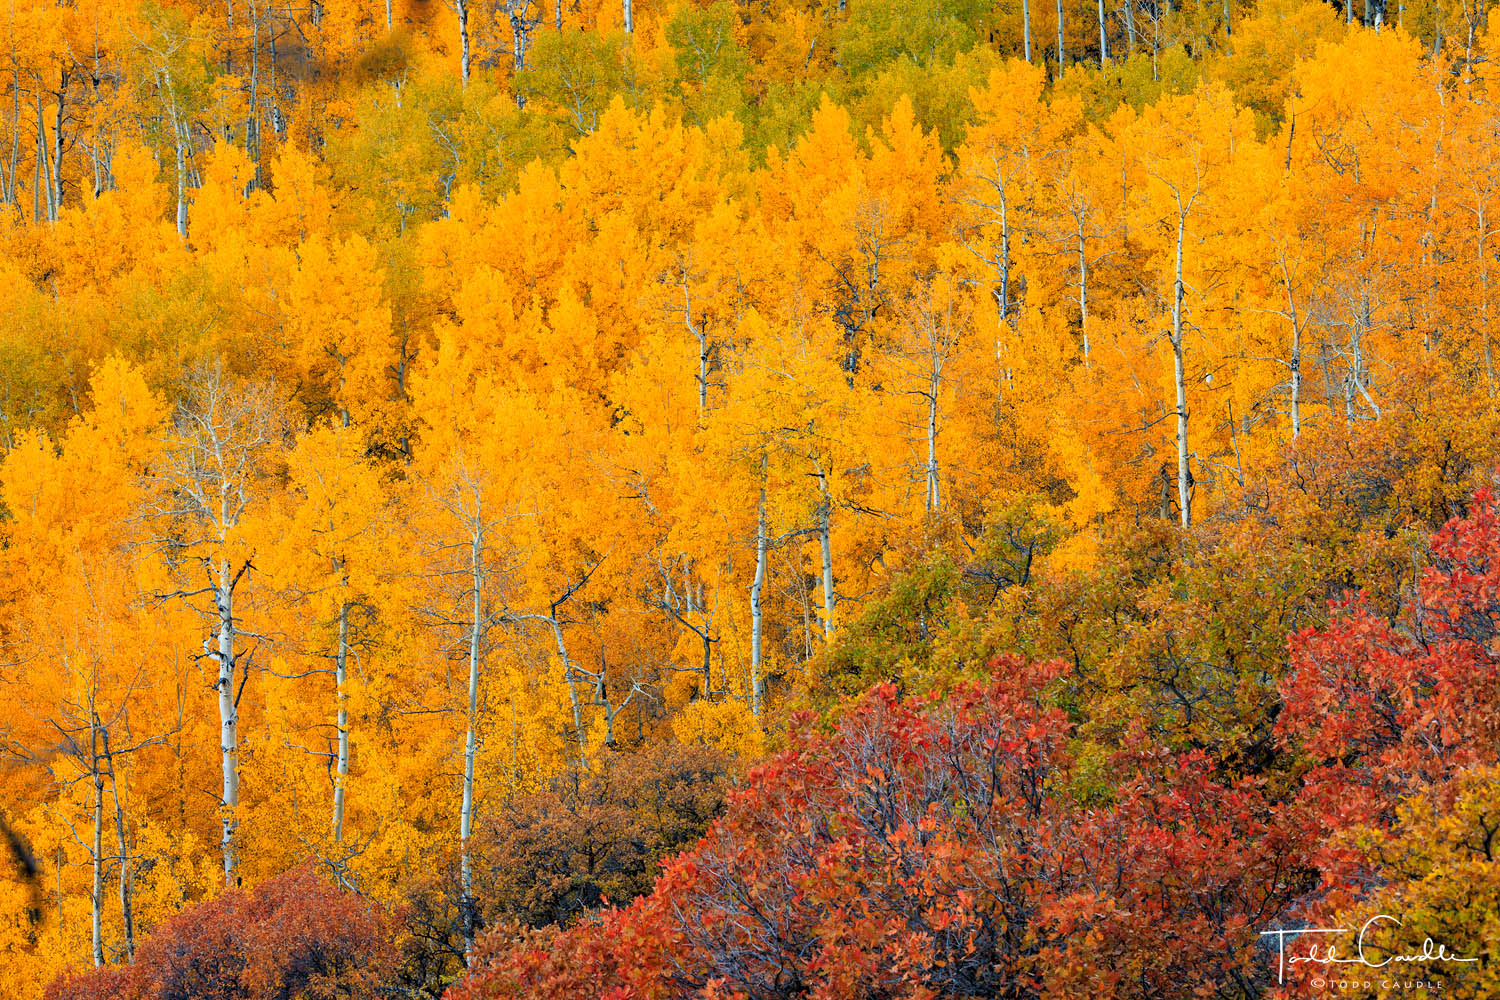 Even more brilliant fall color above Capitol Creek.